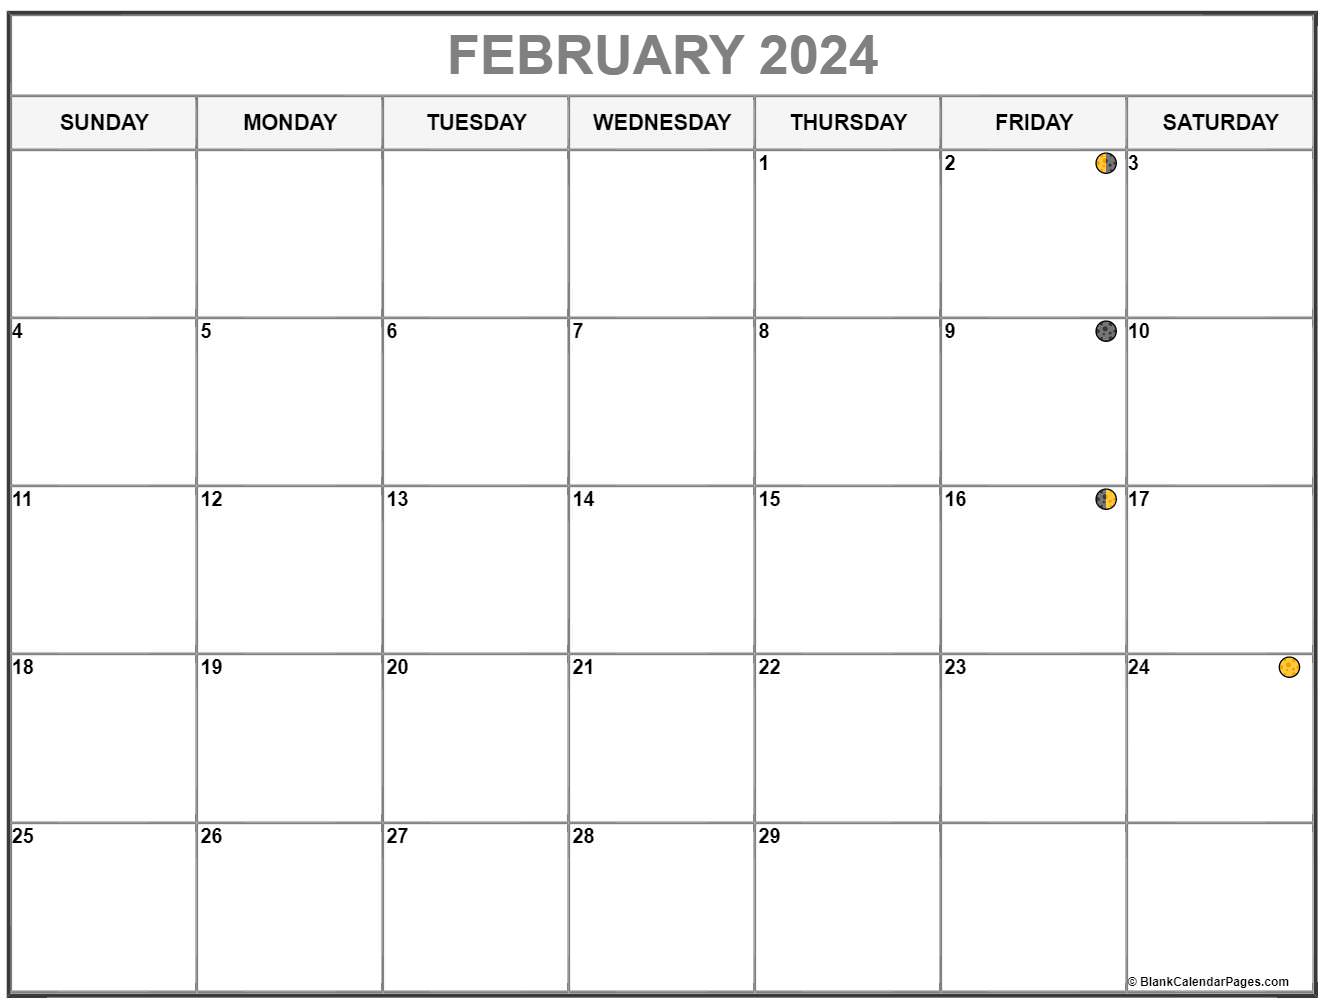 Lunar Calendar March 2022 February 2022 Lunar Calendar | Moon Phase Calendar